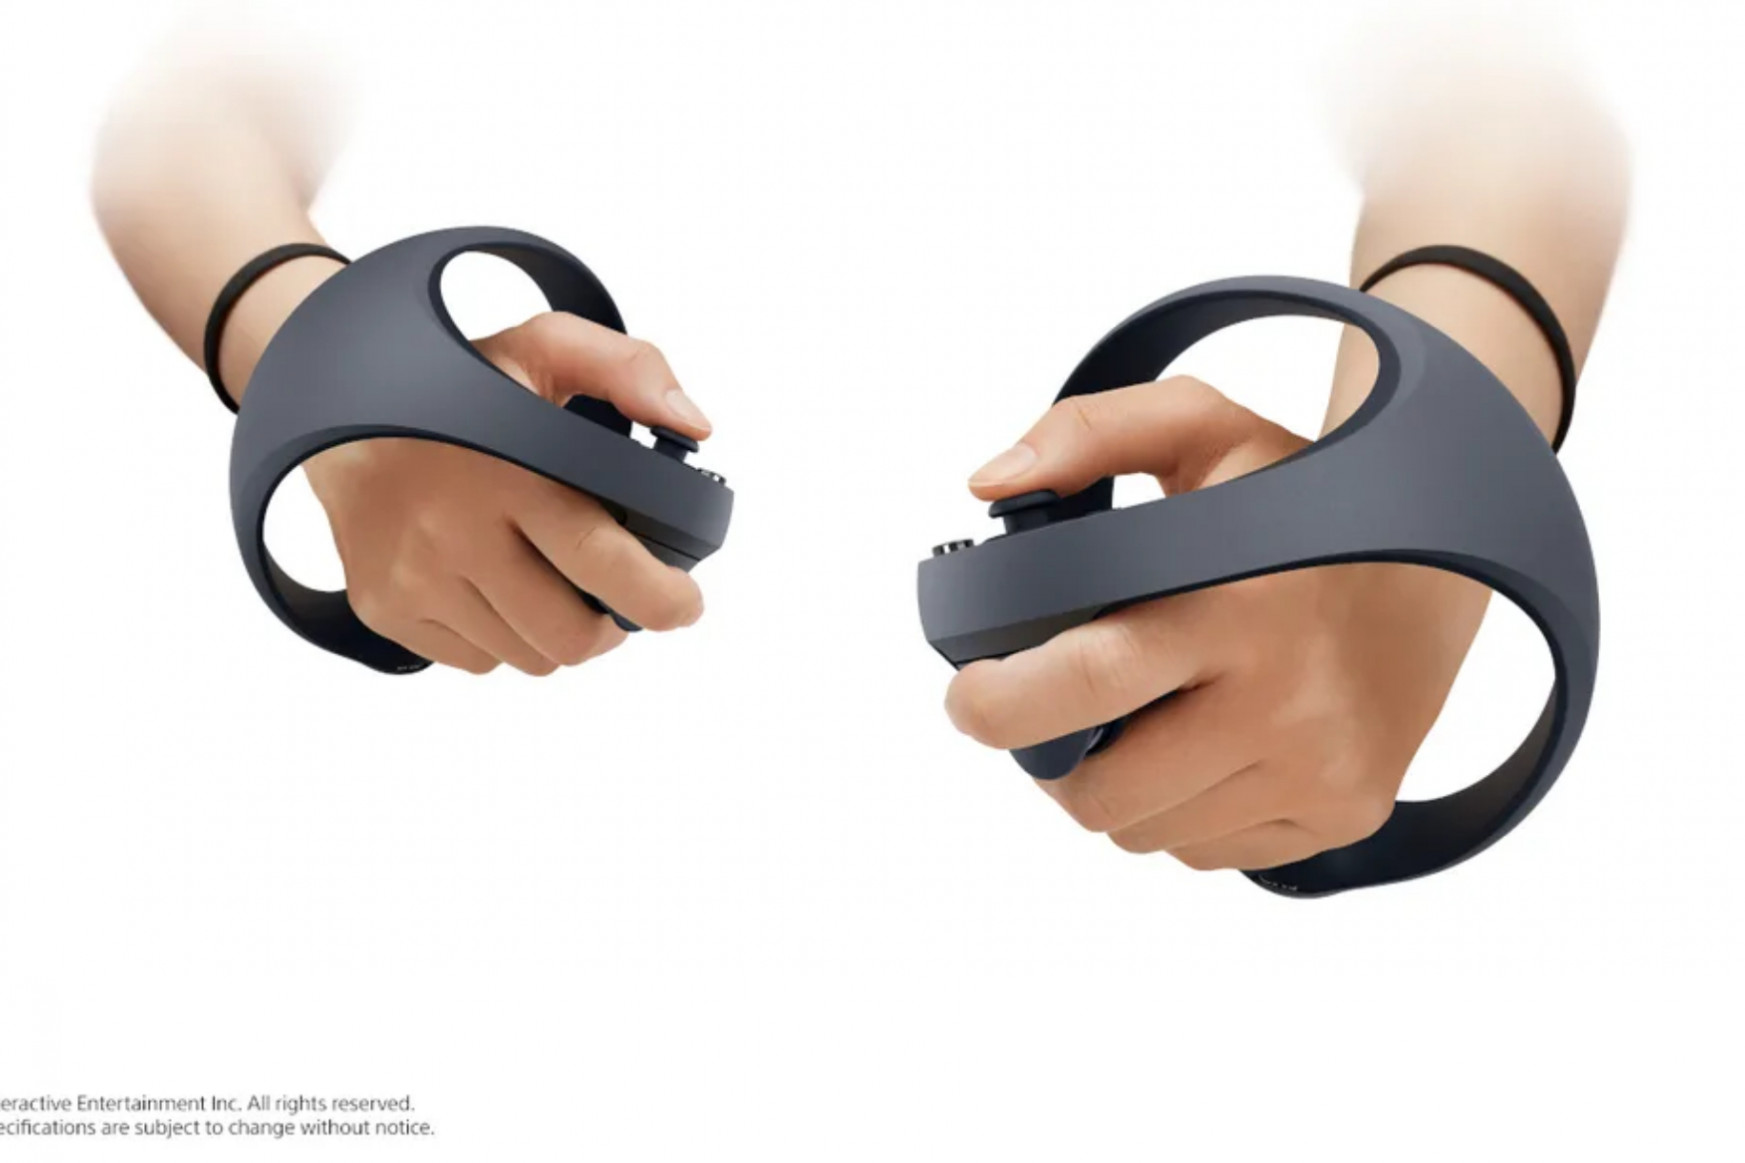 Új PlayStation VR-kontrollert mutatott be a Sony